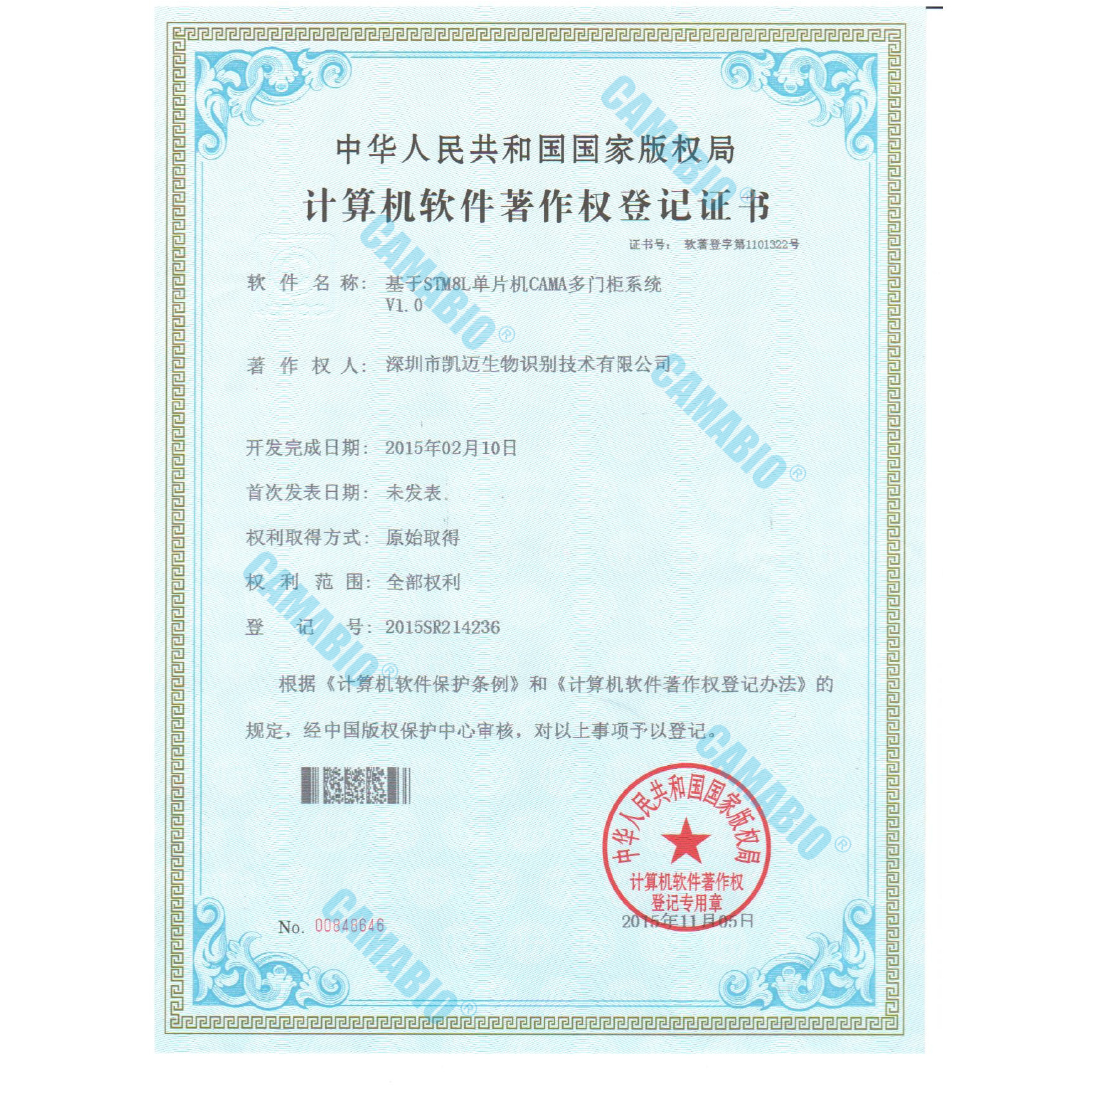 Certificate of CAMABIO Multi-Door Deposit Box System Based STM8L Controller